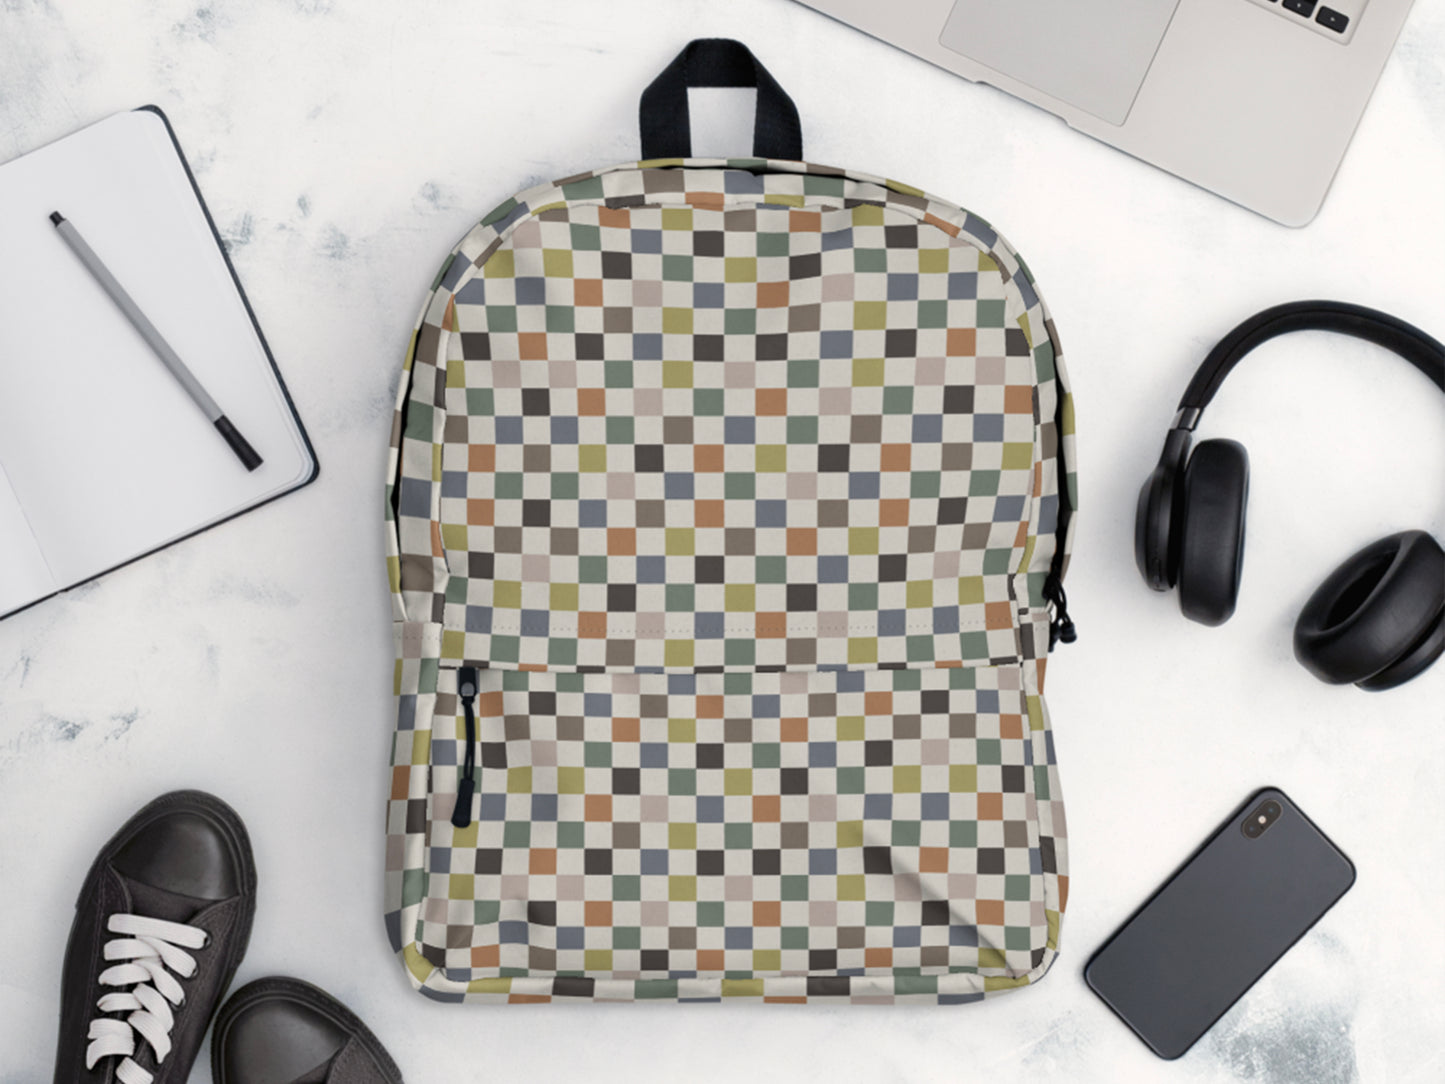 Earth Tone Checkered Backpack